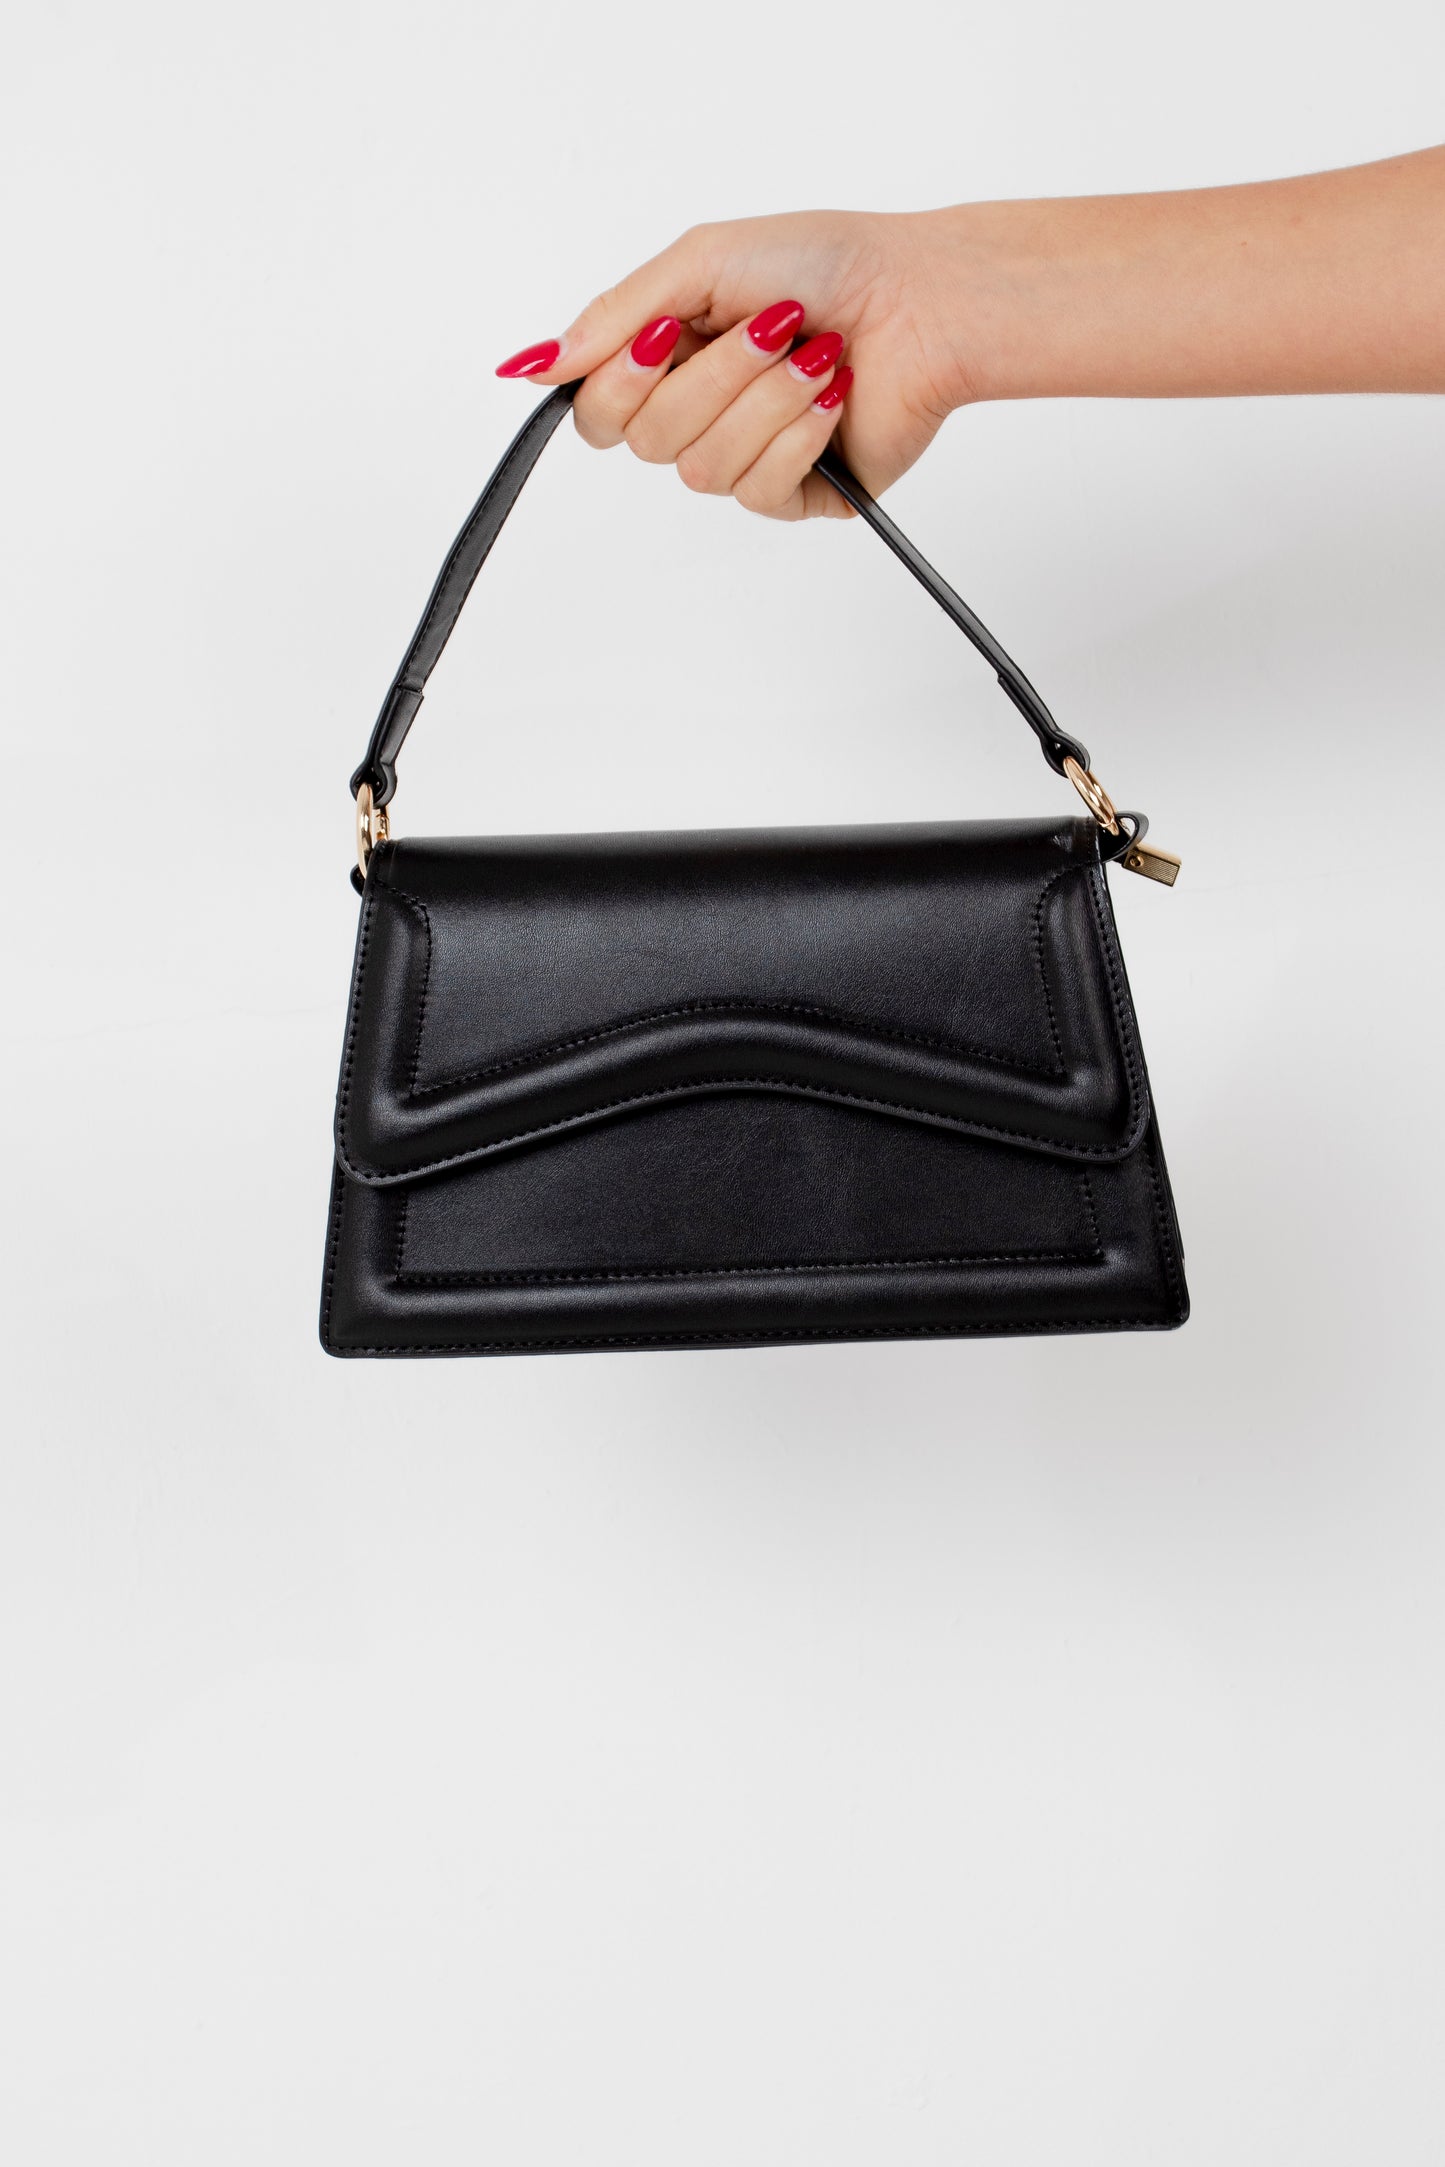 ALAYNA - Black Mini Bag